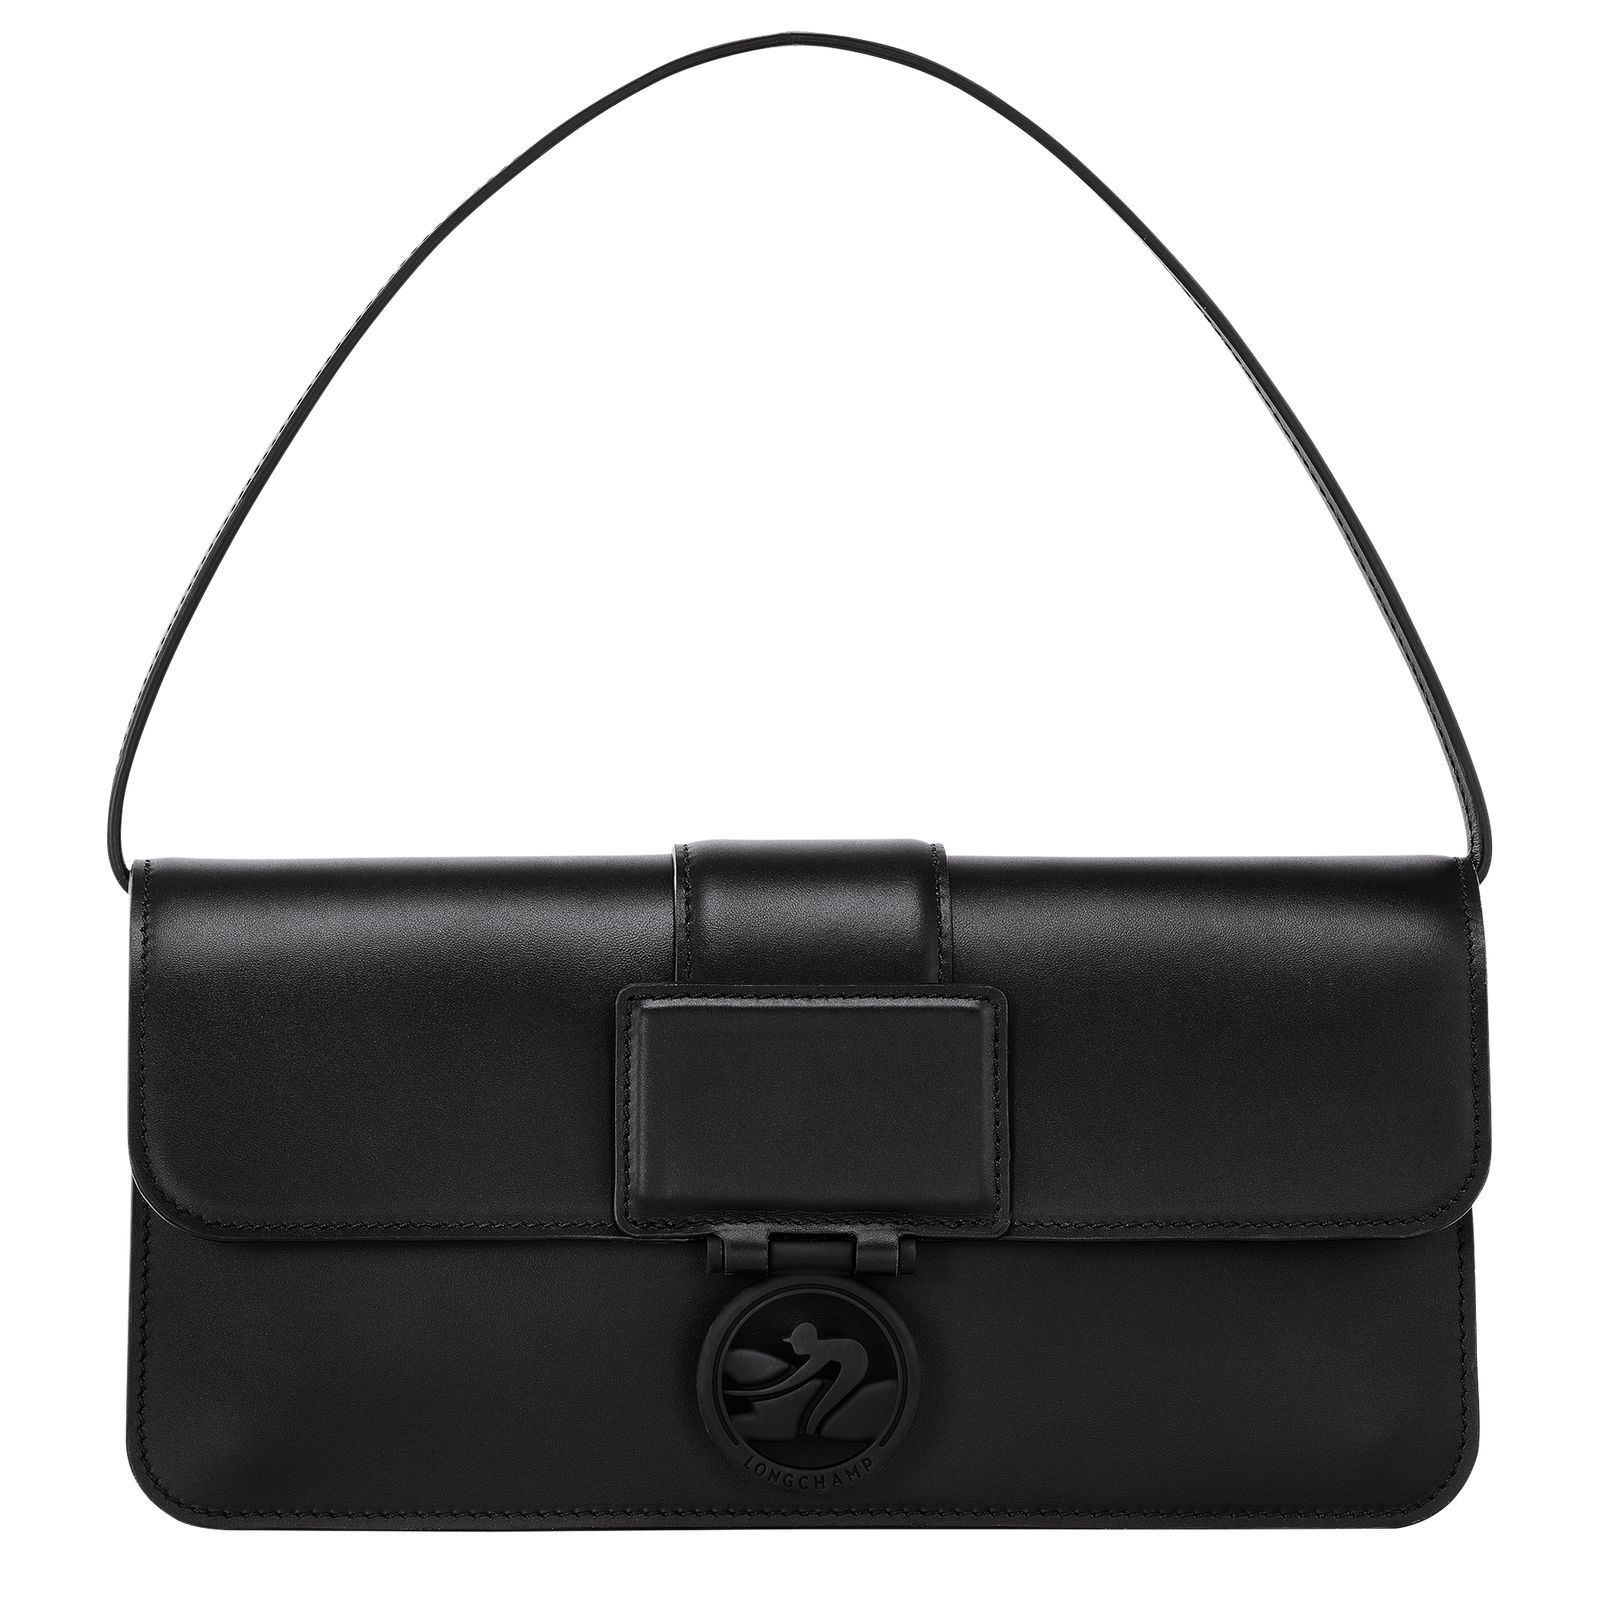 Box-Trot M Shoulder bag Black - Leather | Longchamp GB | Longchamp